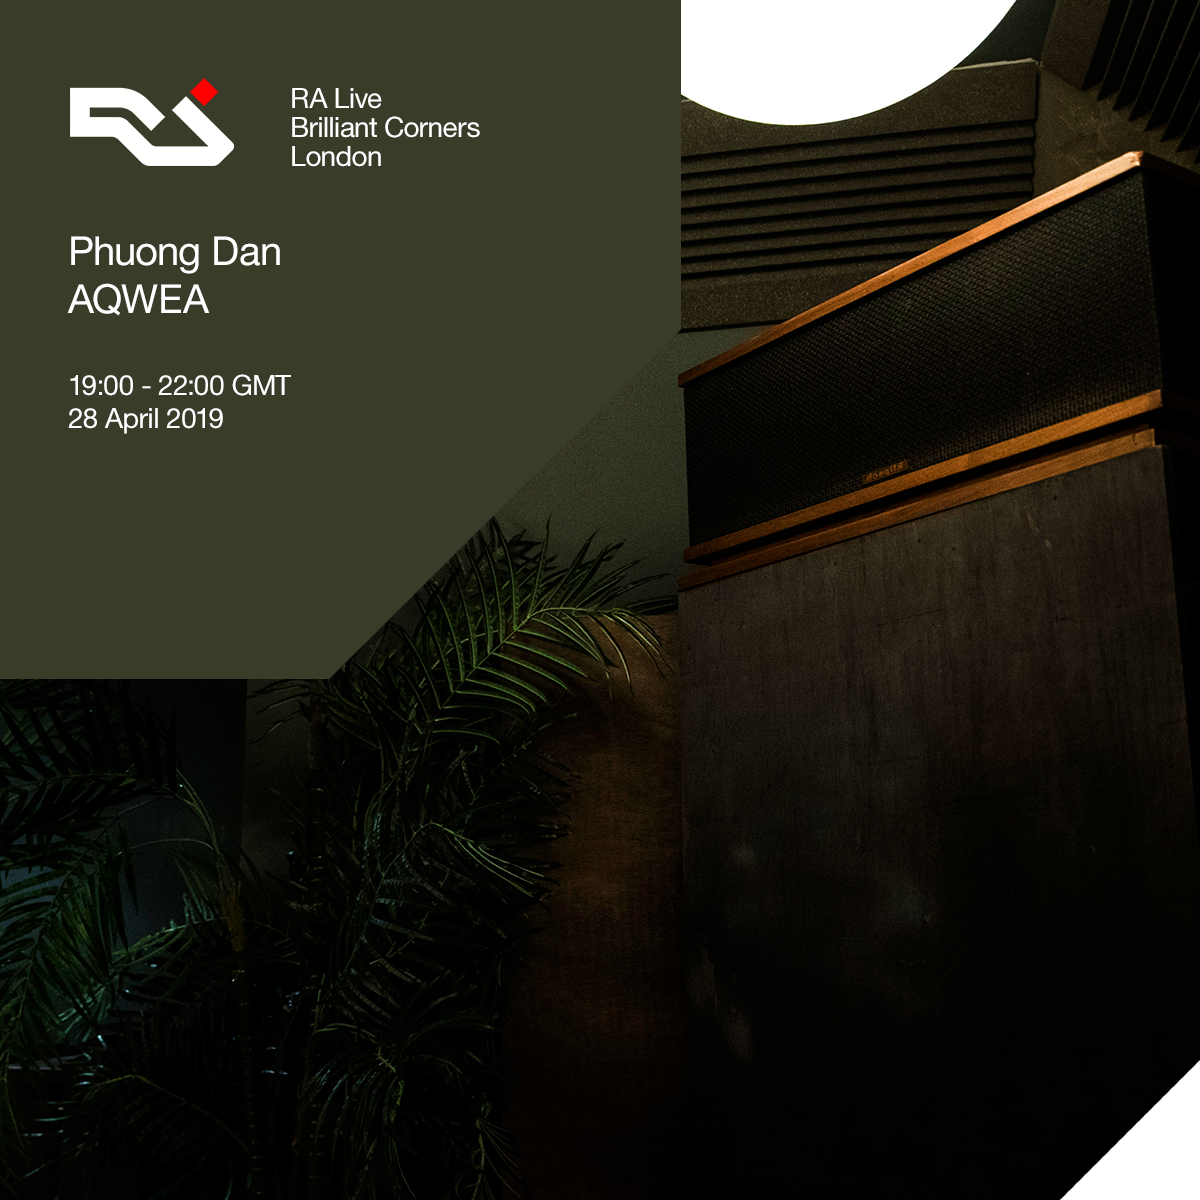 Phuong Dan and AQWEA to play RA Live at Brilliant Corners image